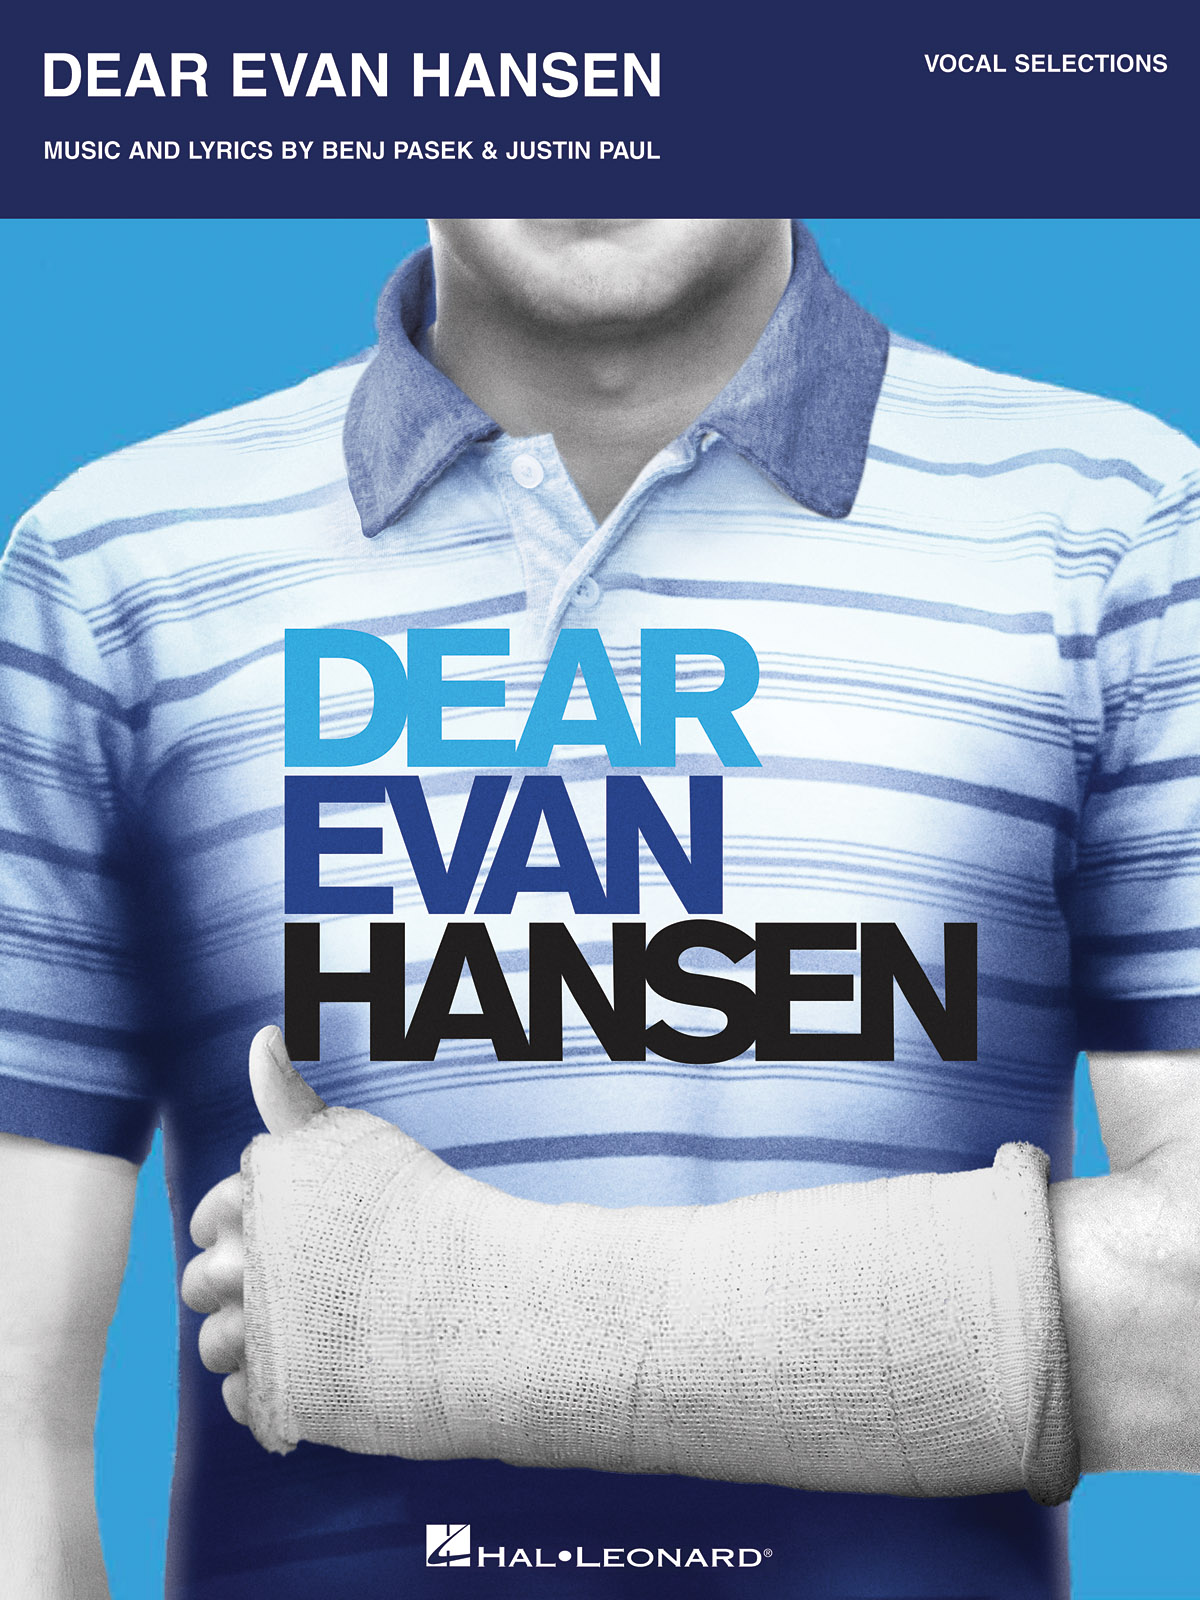 Dear Evan Hansen - Vocal Selections - noty pro zpěv a klavír s akordy na kytaru